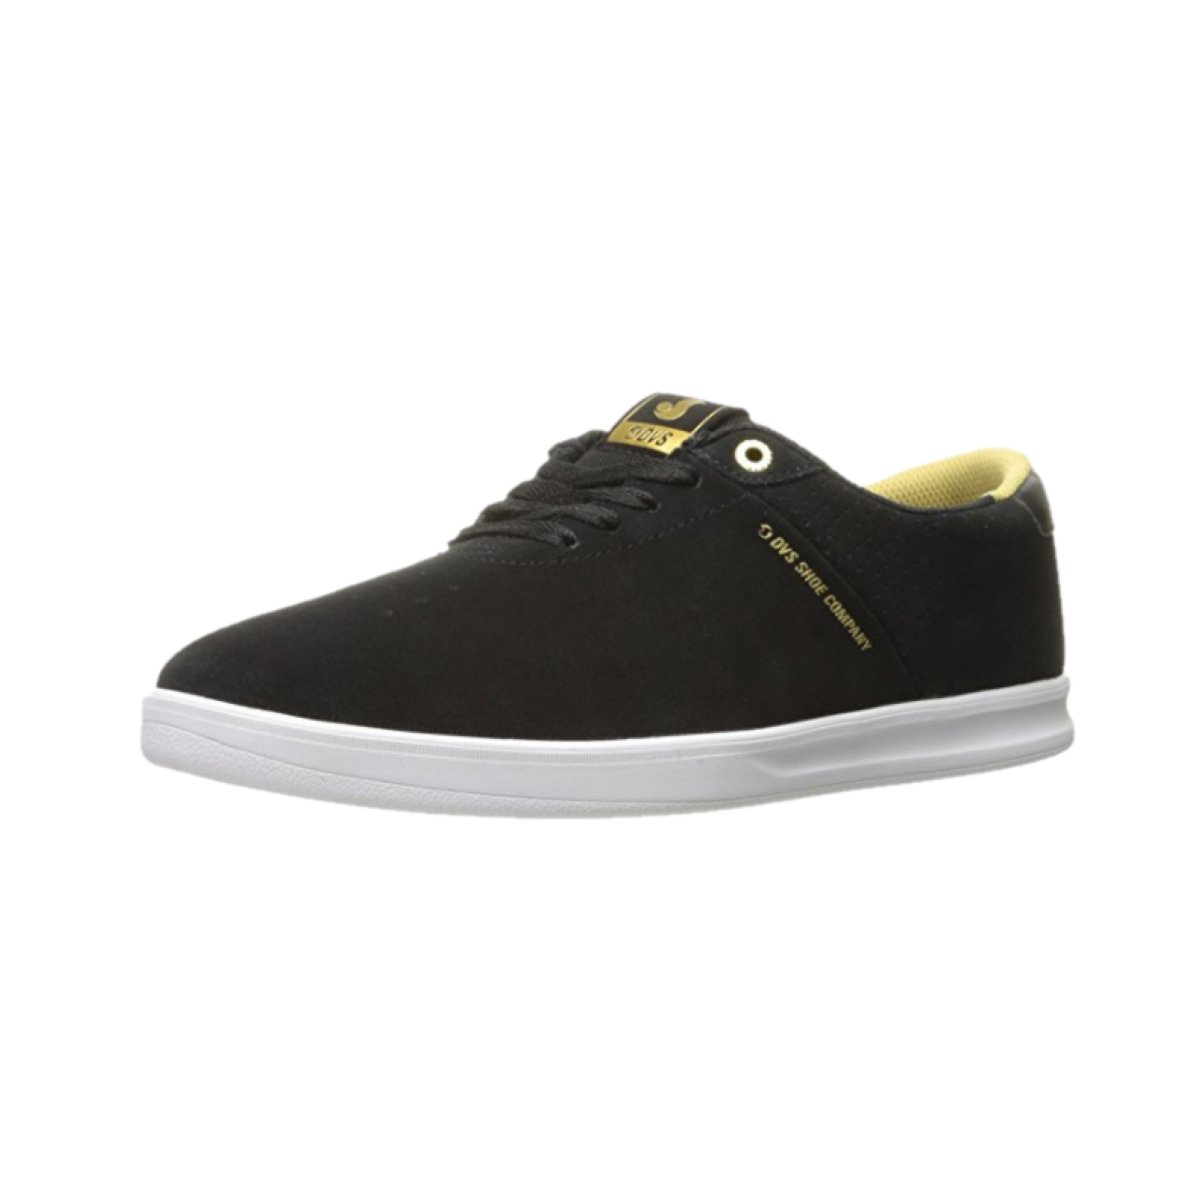 DVS F0000260004 RICO SC MN'S (M) Black/Gold Suede Skate Shoes